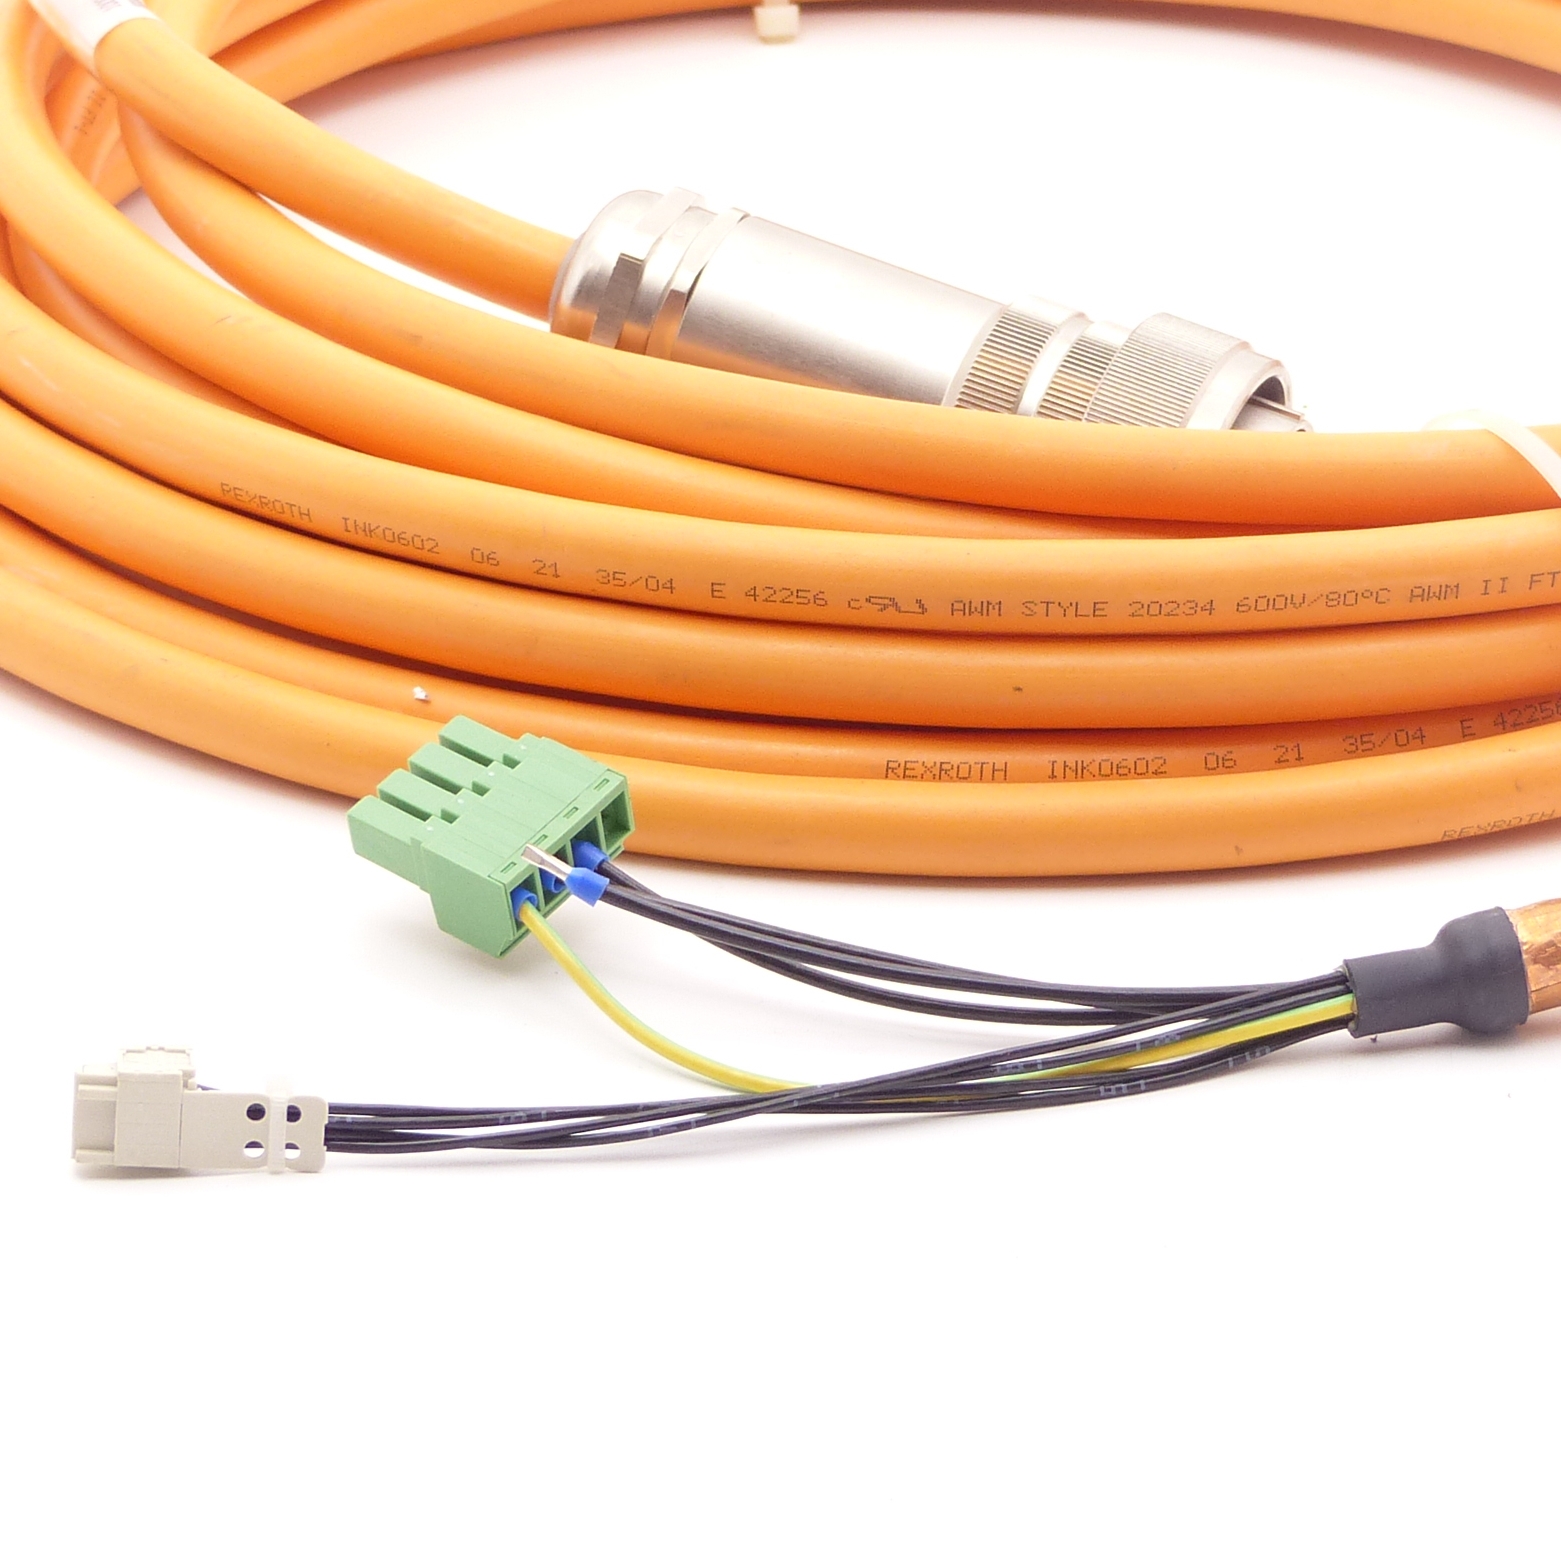 Kabel IKG-4139 